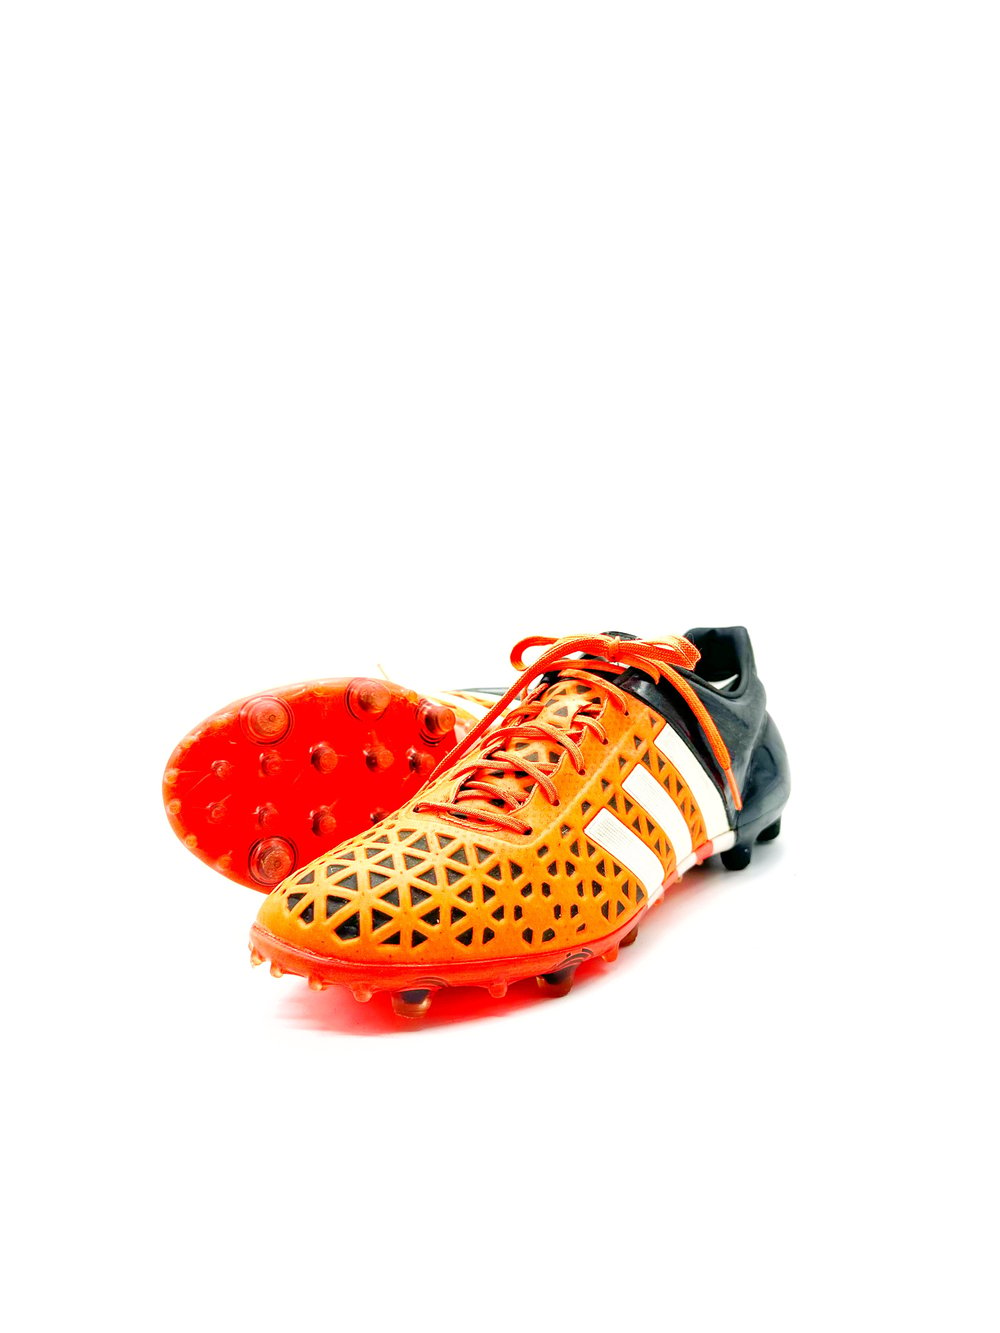 Image of Adidas 15.1 Orange FG WORN